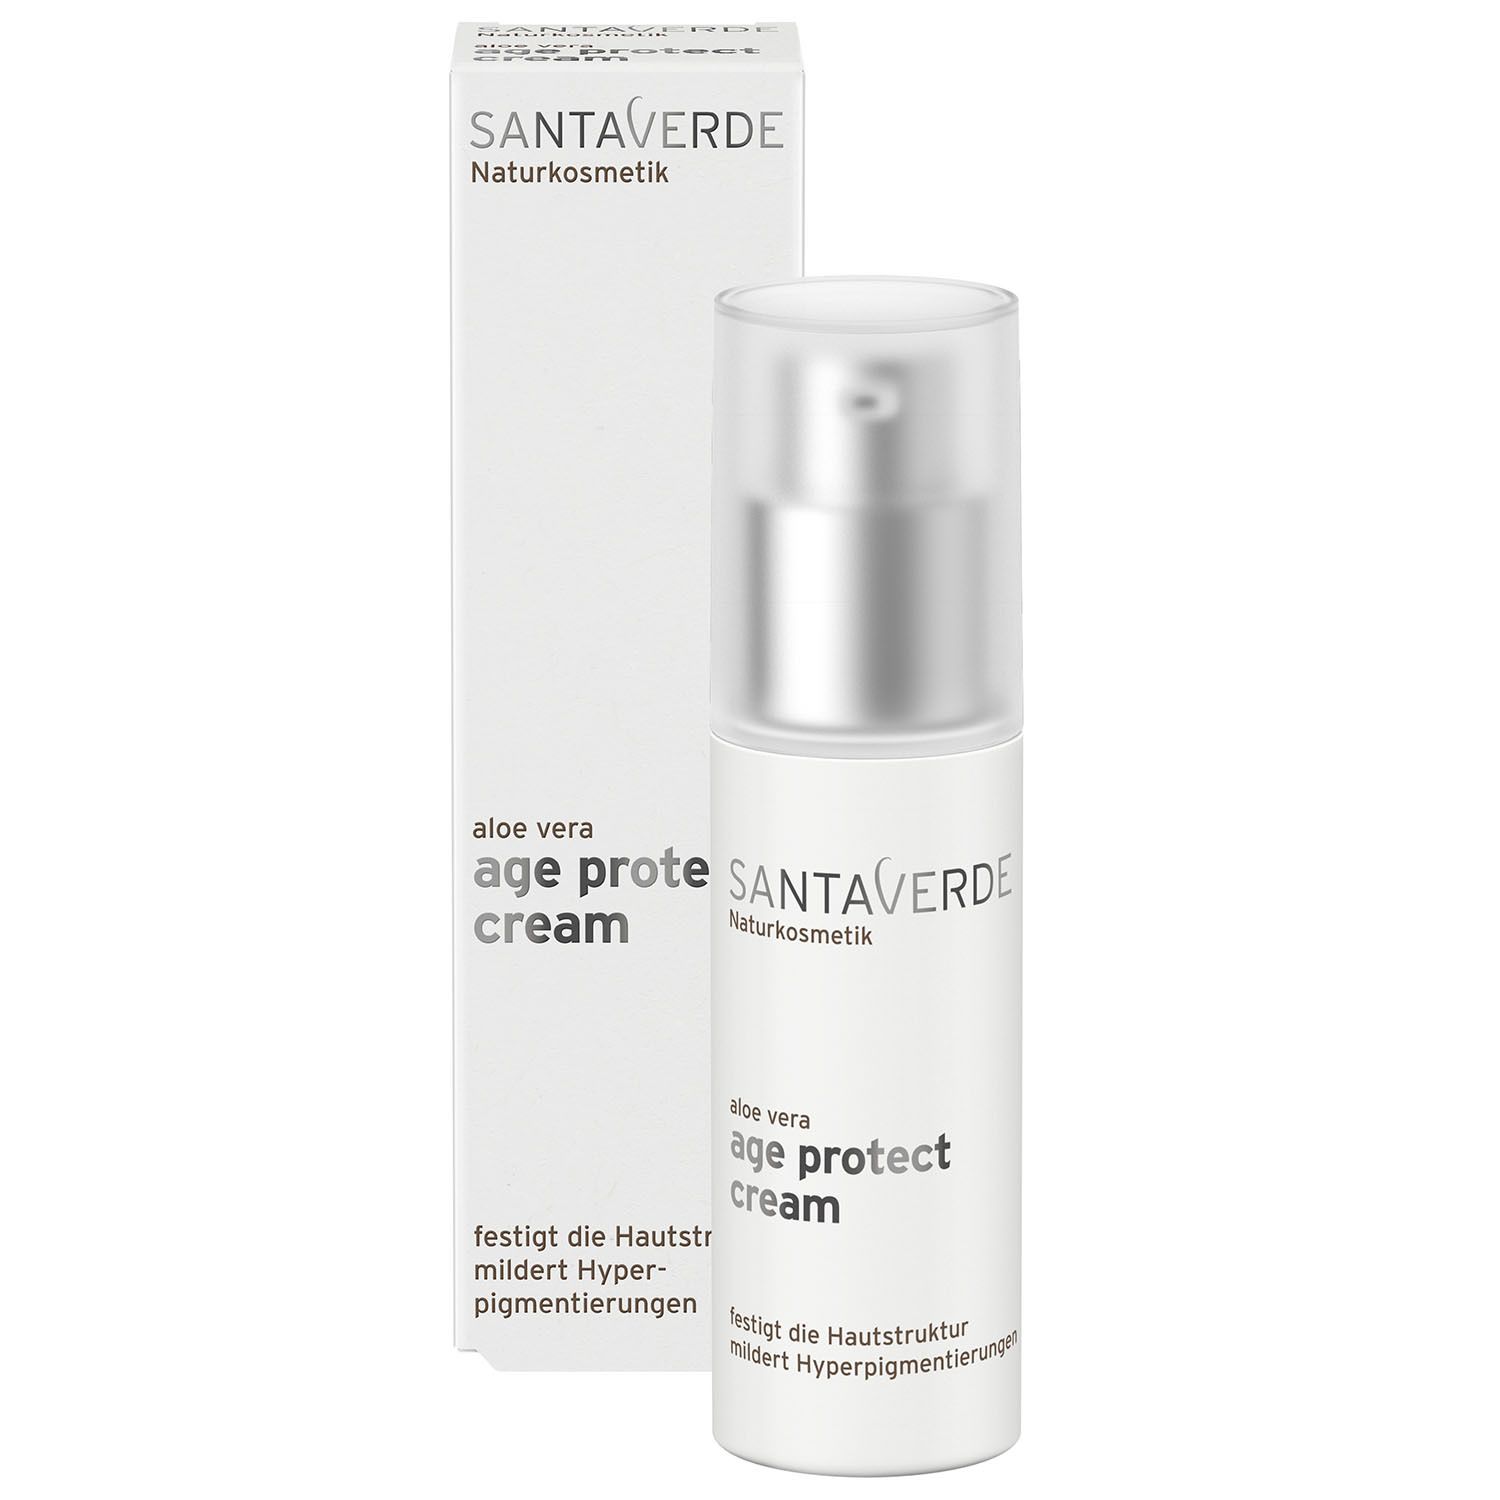 Image of SANTAVERDE age protect cream